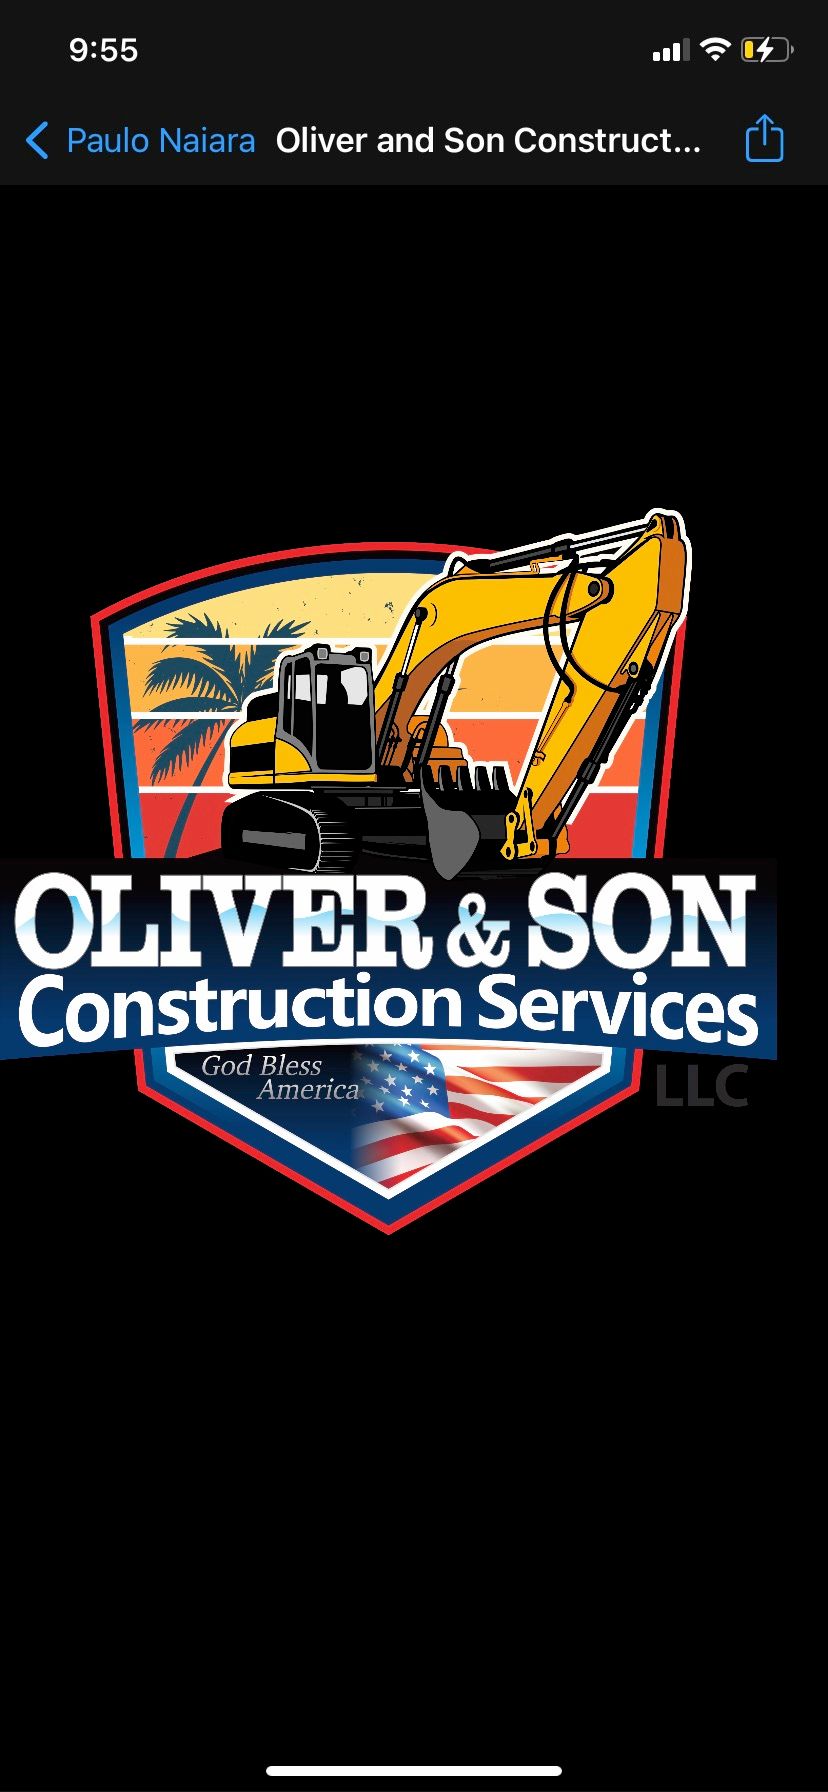 Oliver & Son Construction Services LLC